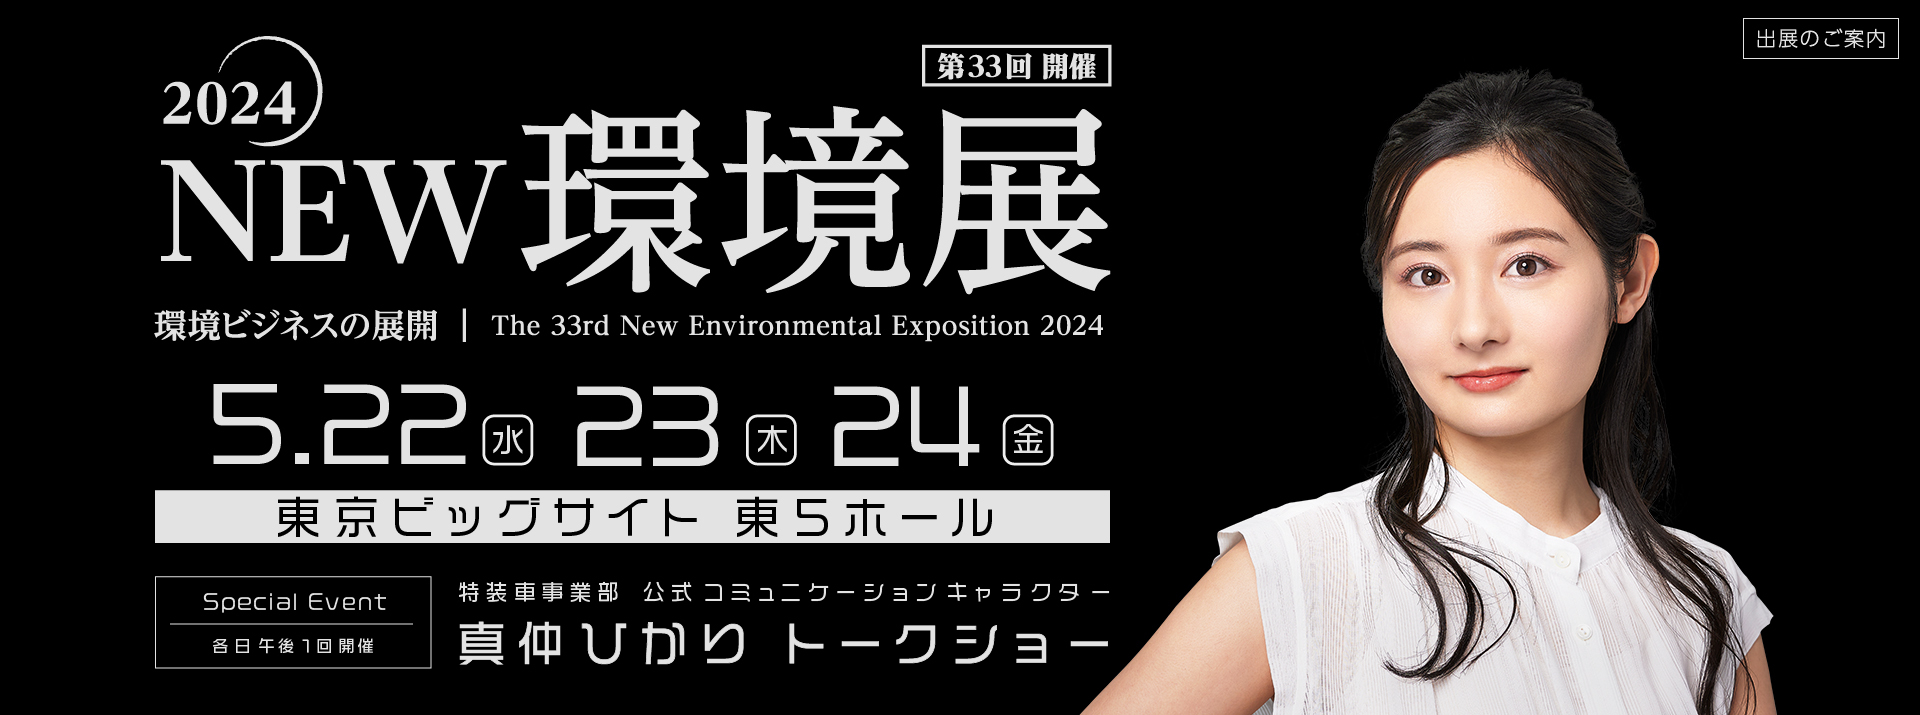 2024NEW環境展